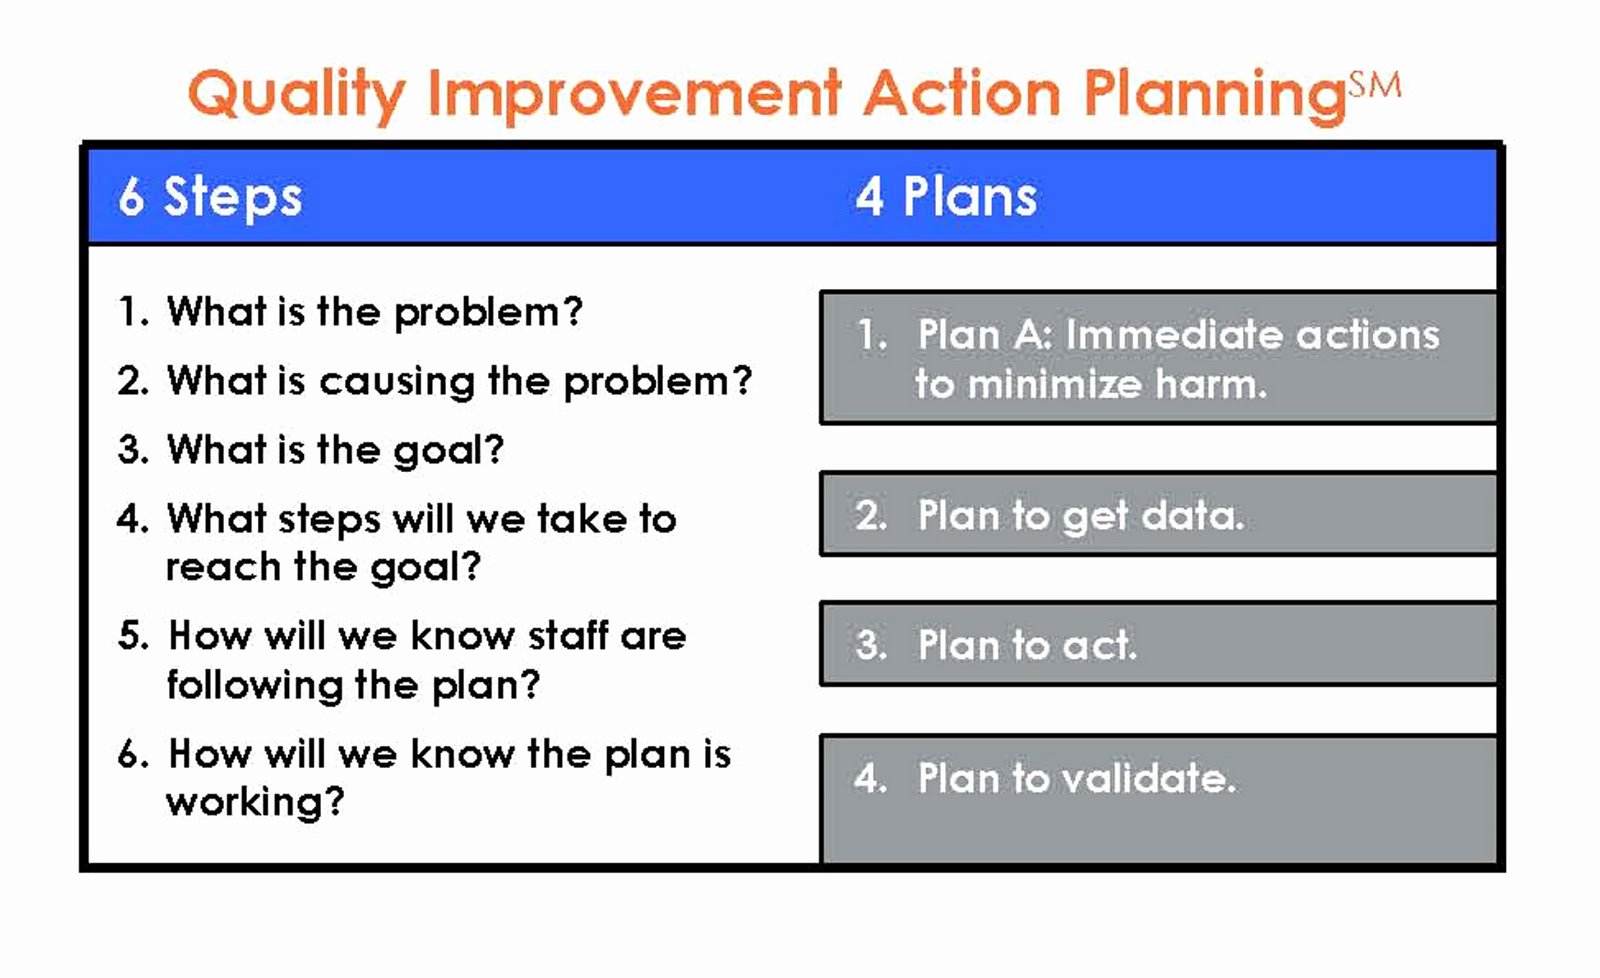 Quality Improvement Plan Template Healthcare Lovely Improving Healthcare Quality and Pliance May 2010